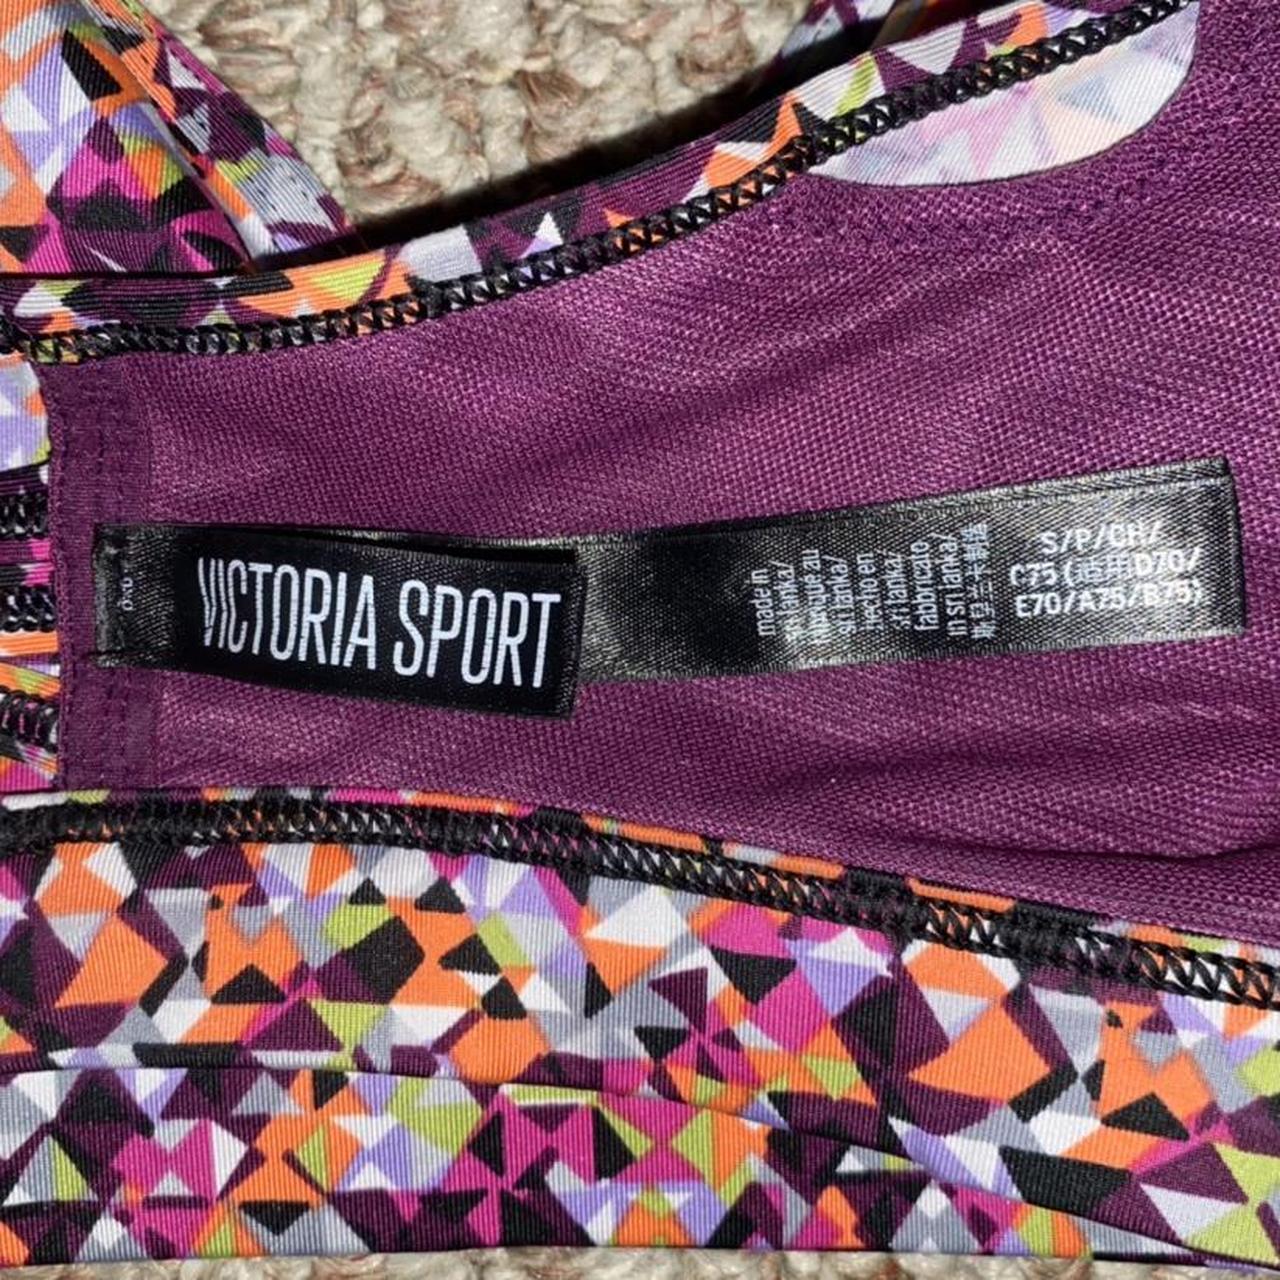 Purple Victoria's Secret bra size: 32D - Depop